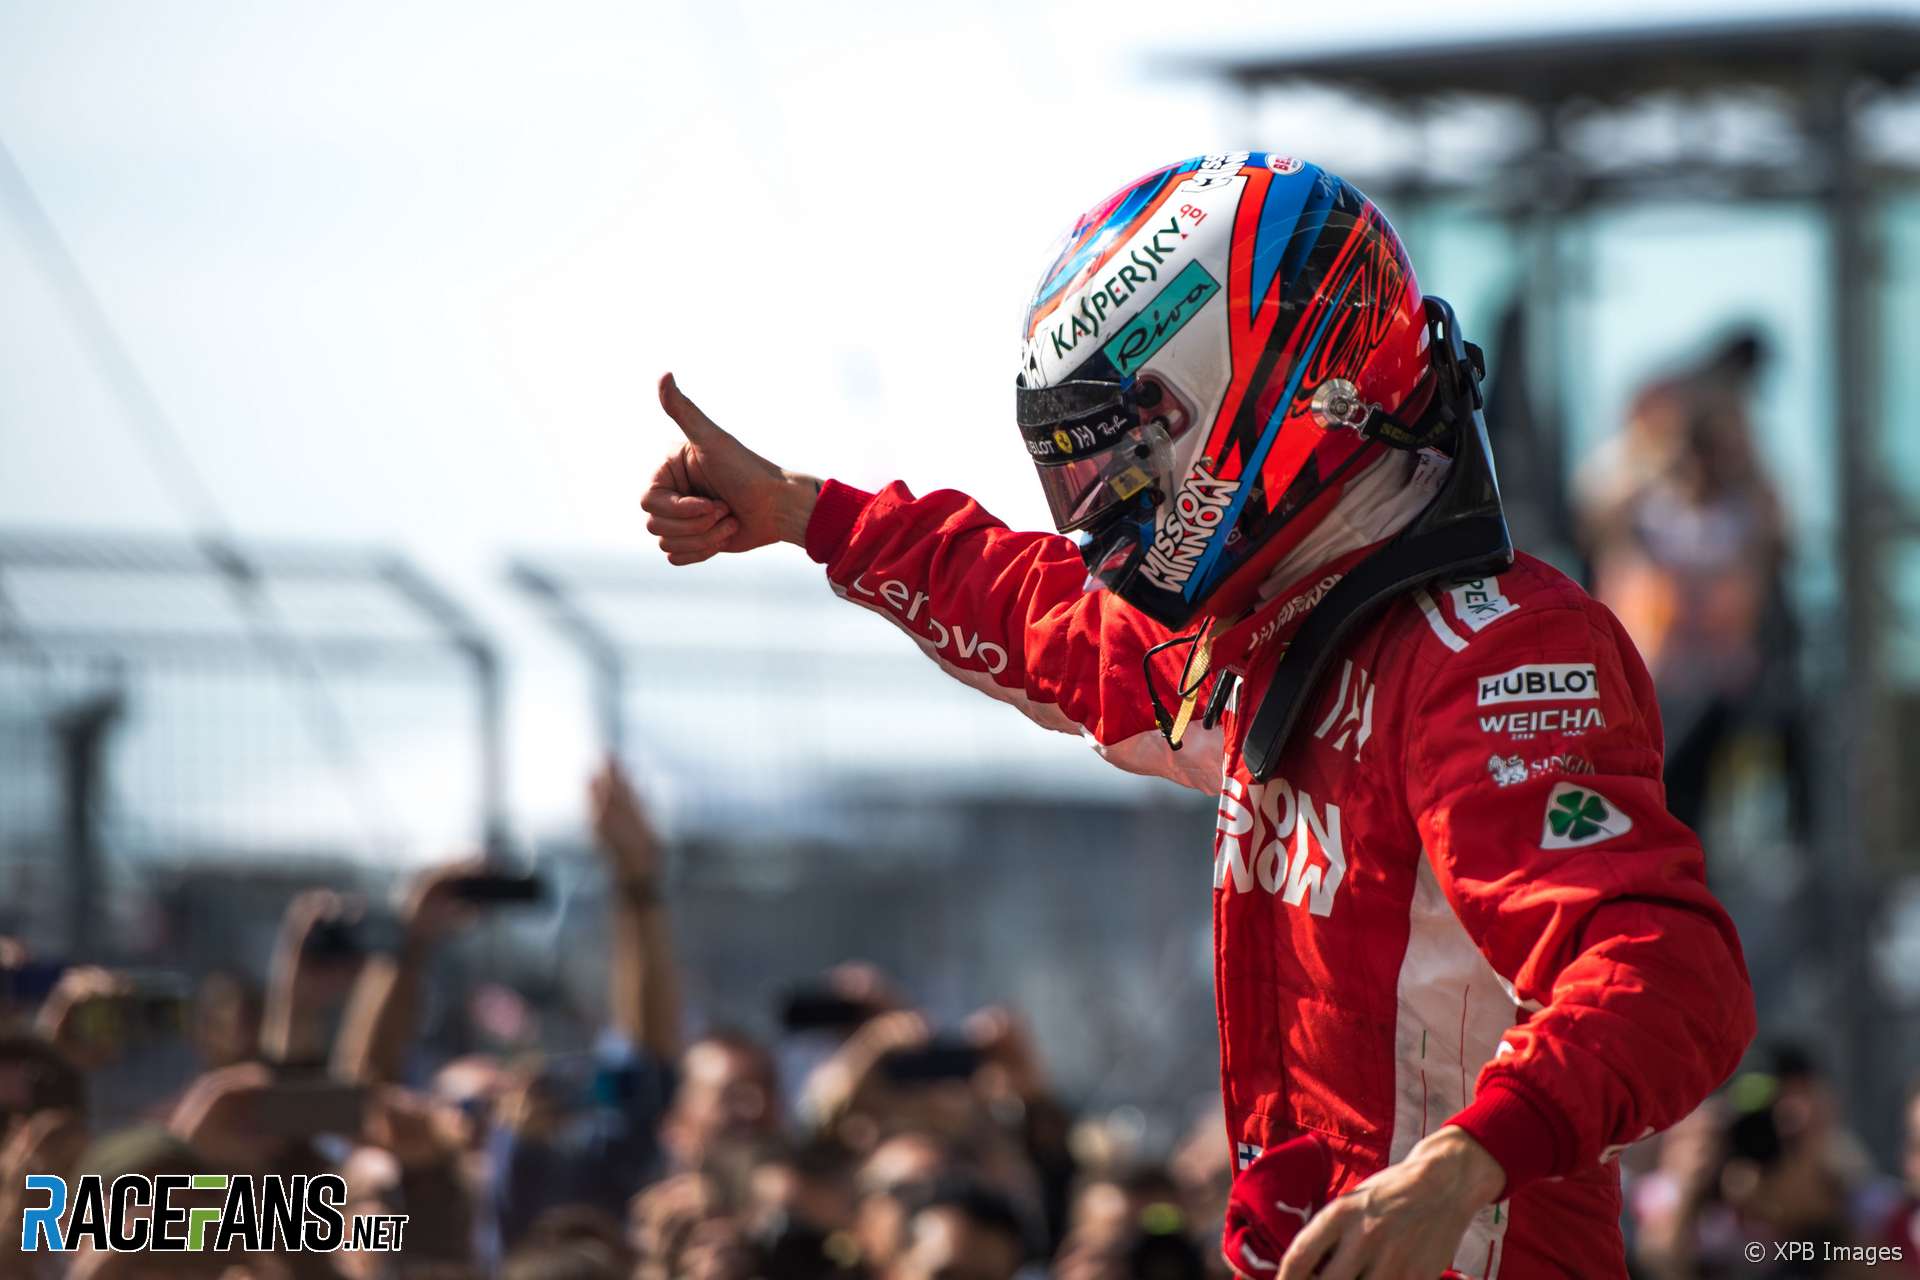 Kimi Raikkonen, Ferrari, Circuit of the Americas, 2018